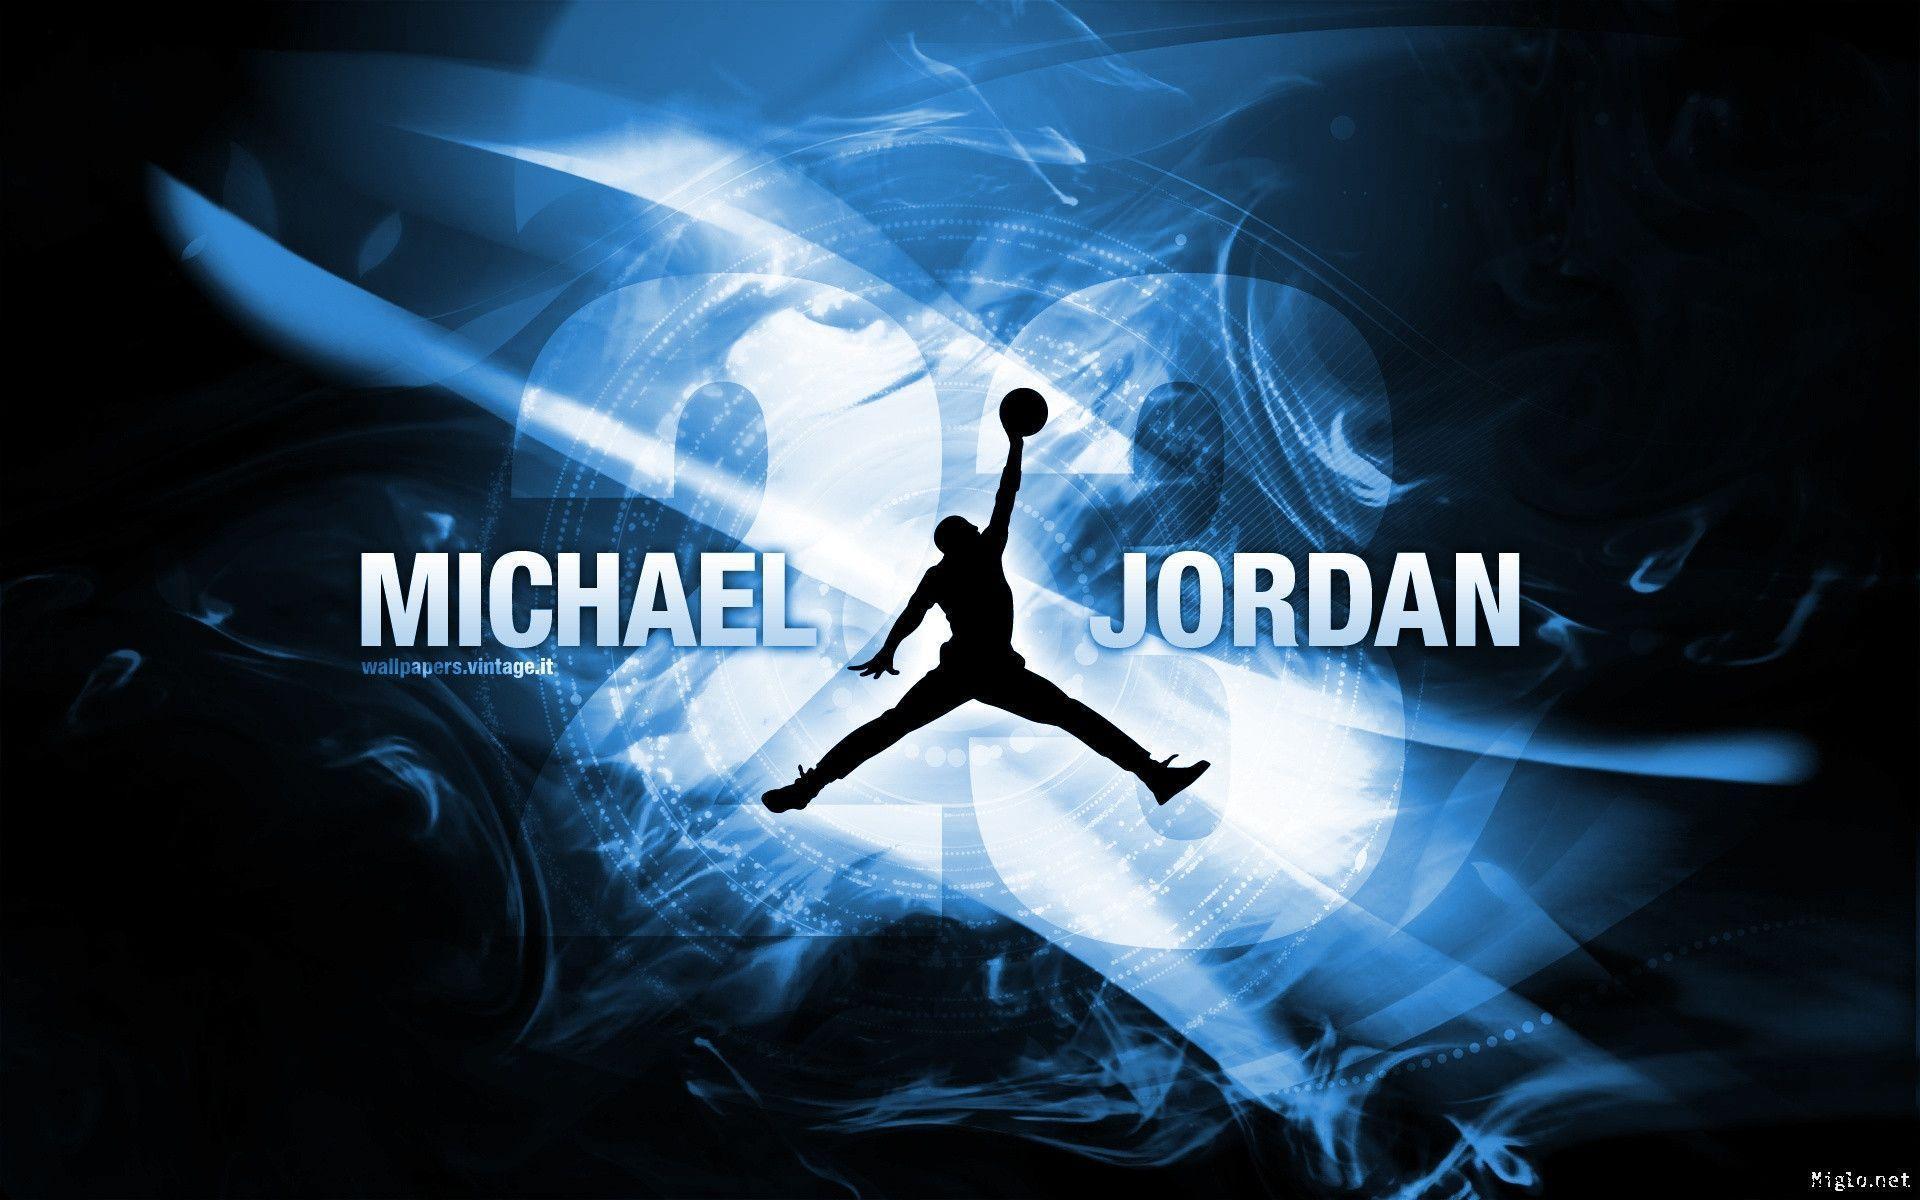 DKORARTE Modern Photographic Picture Michael Jordan Jumpman Logo Historical  Jump Basketball 97 x 62 cm Ref 27370 : Amazon.co.uk: Home & Kitchen